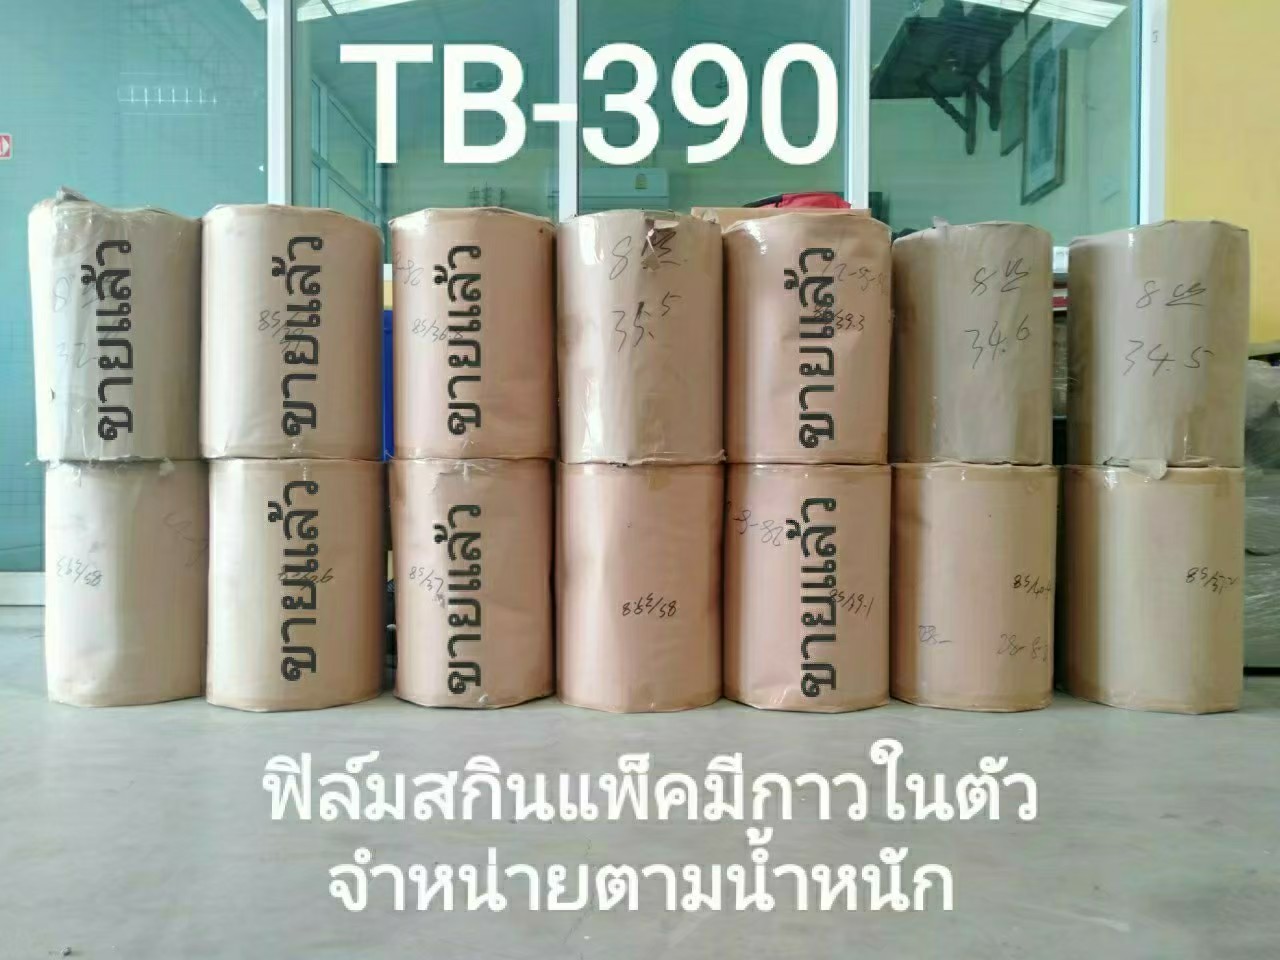 TB-390 ฟิล์มสกินแพ็ค